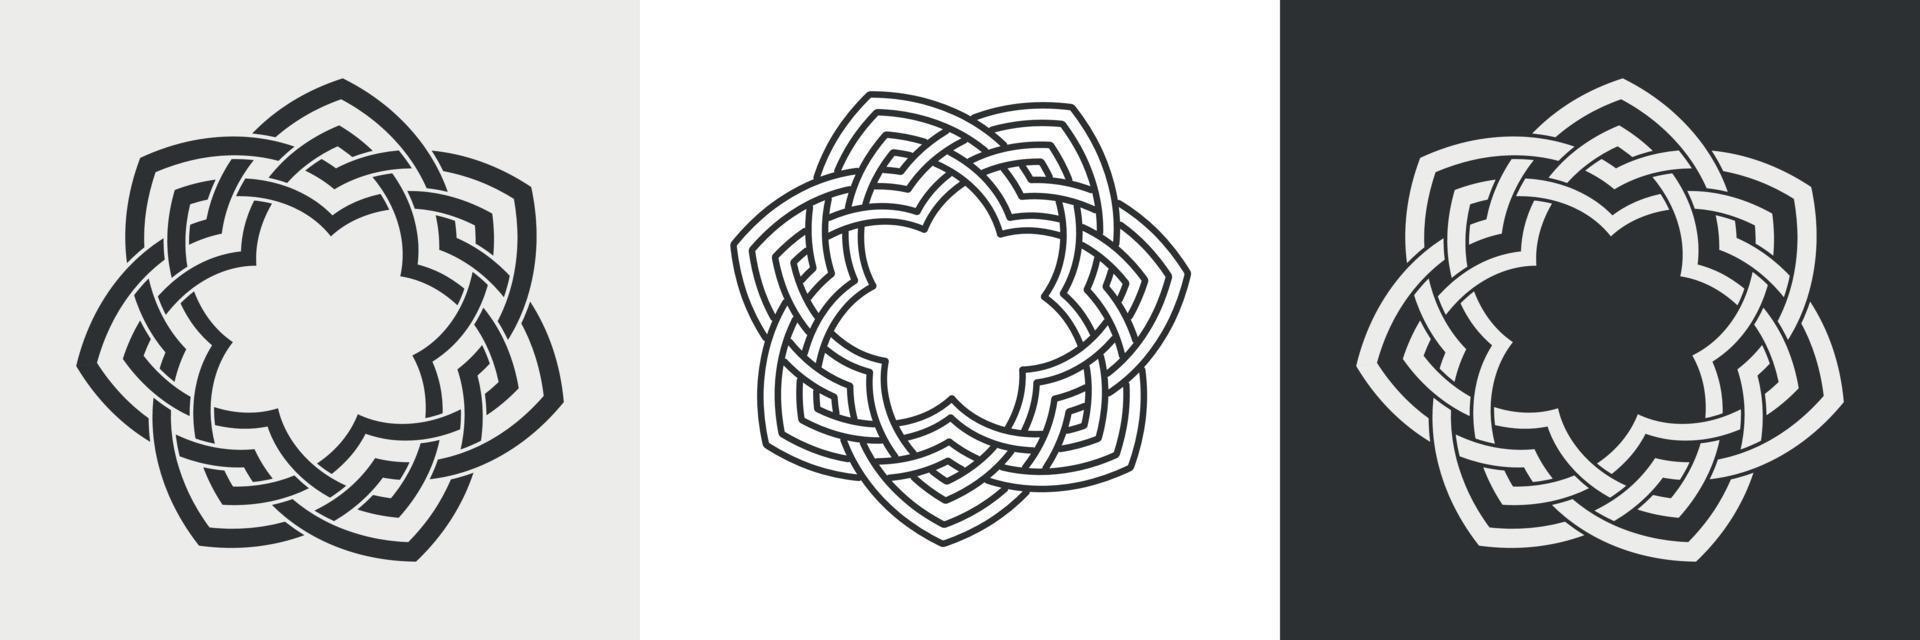 decoratief kader set. circulaire kostganger logo. symmetrisch patroon lauwerkrans. silhouet decor, lijn kunst ornament, inversie touw. vector illustratie